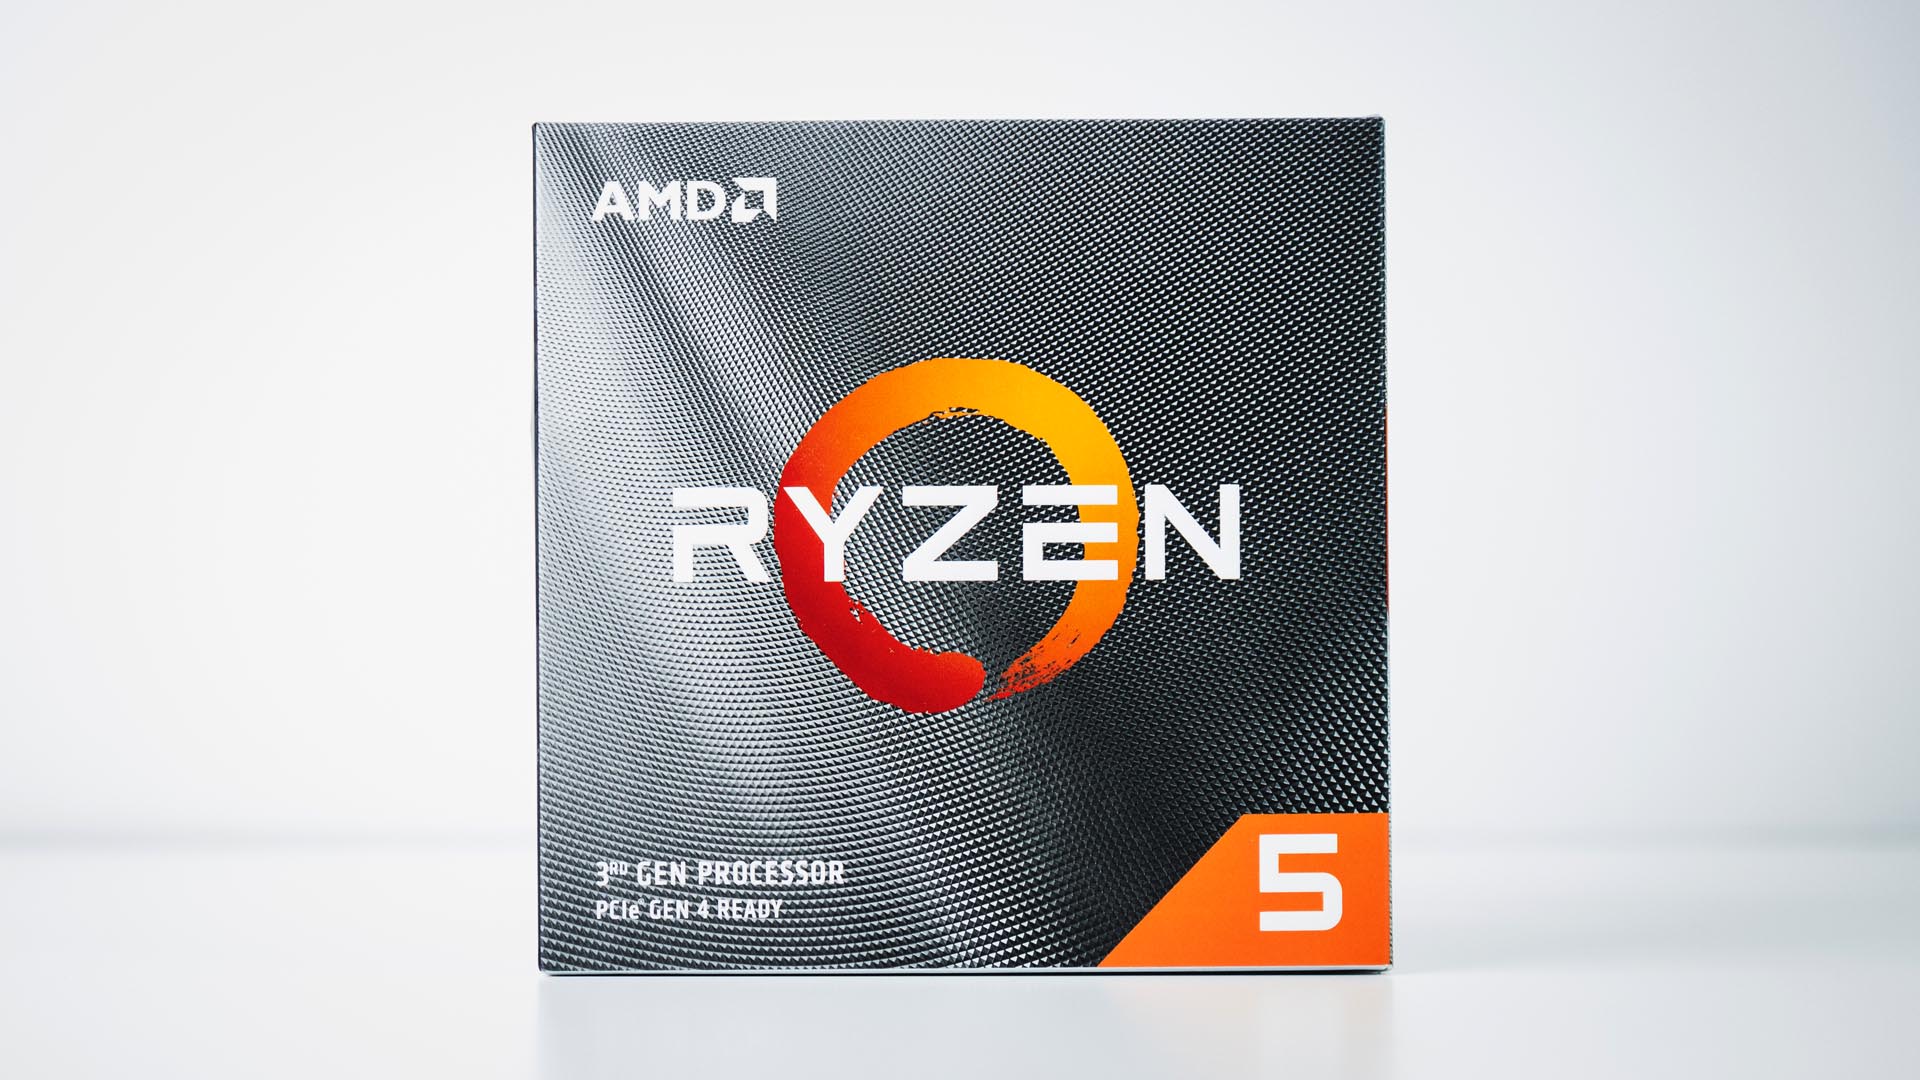 Korrekt fajance Claire Buy this today: AMD Ryzen 5 3600, the best gaming CPU | PCGamesN